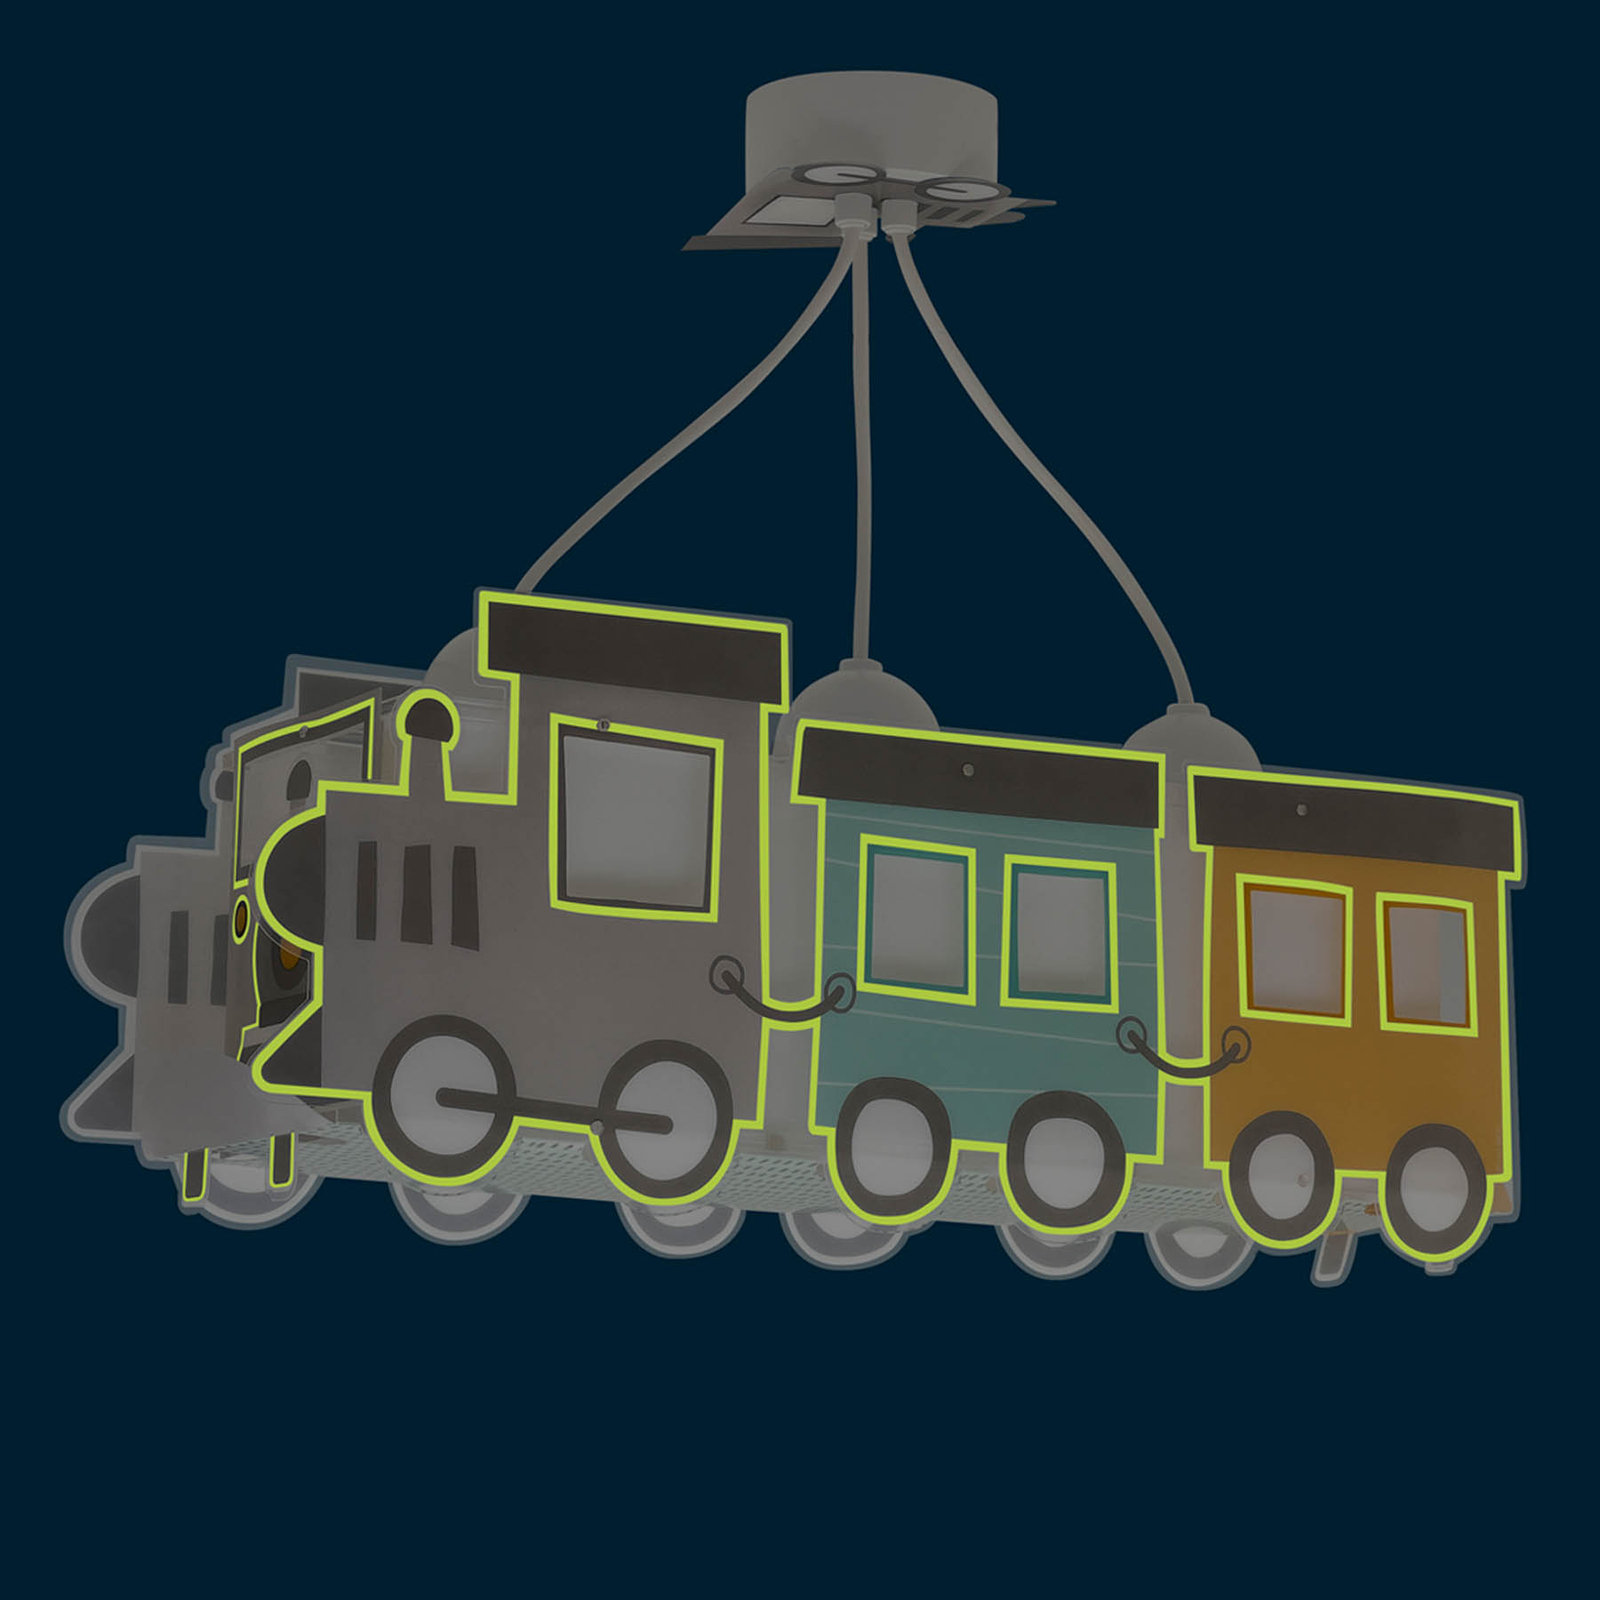 Dalber Night Train hanging light as a locomotive